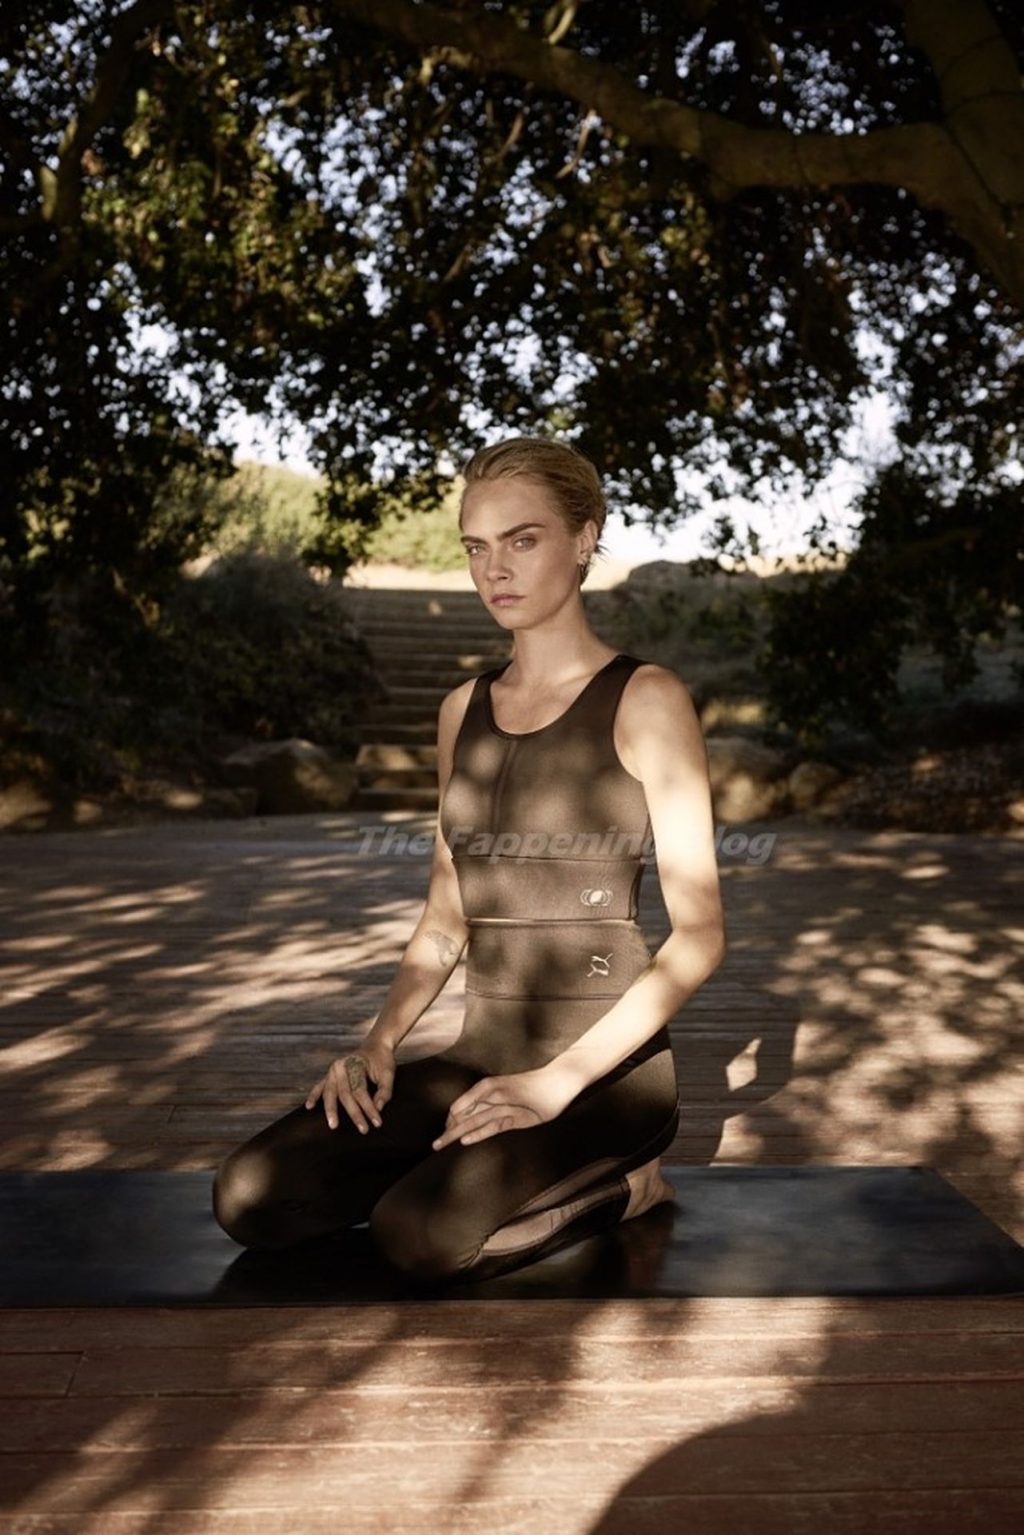 Cara Delevingne Presents a New Puma Yoga Collection (10 Photos)